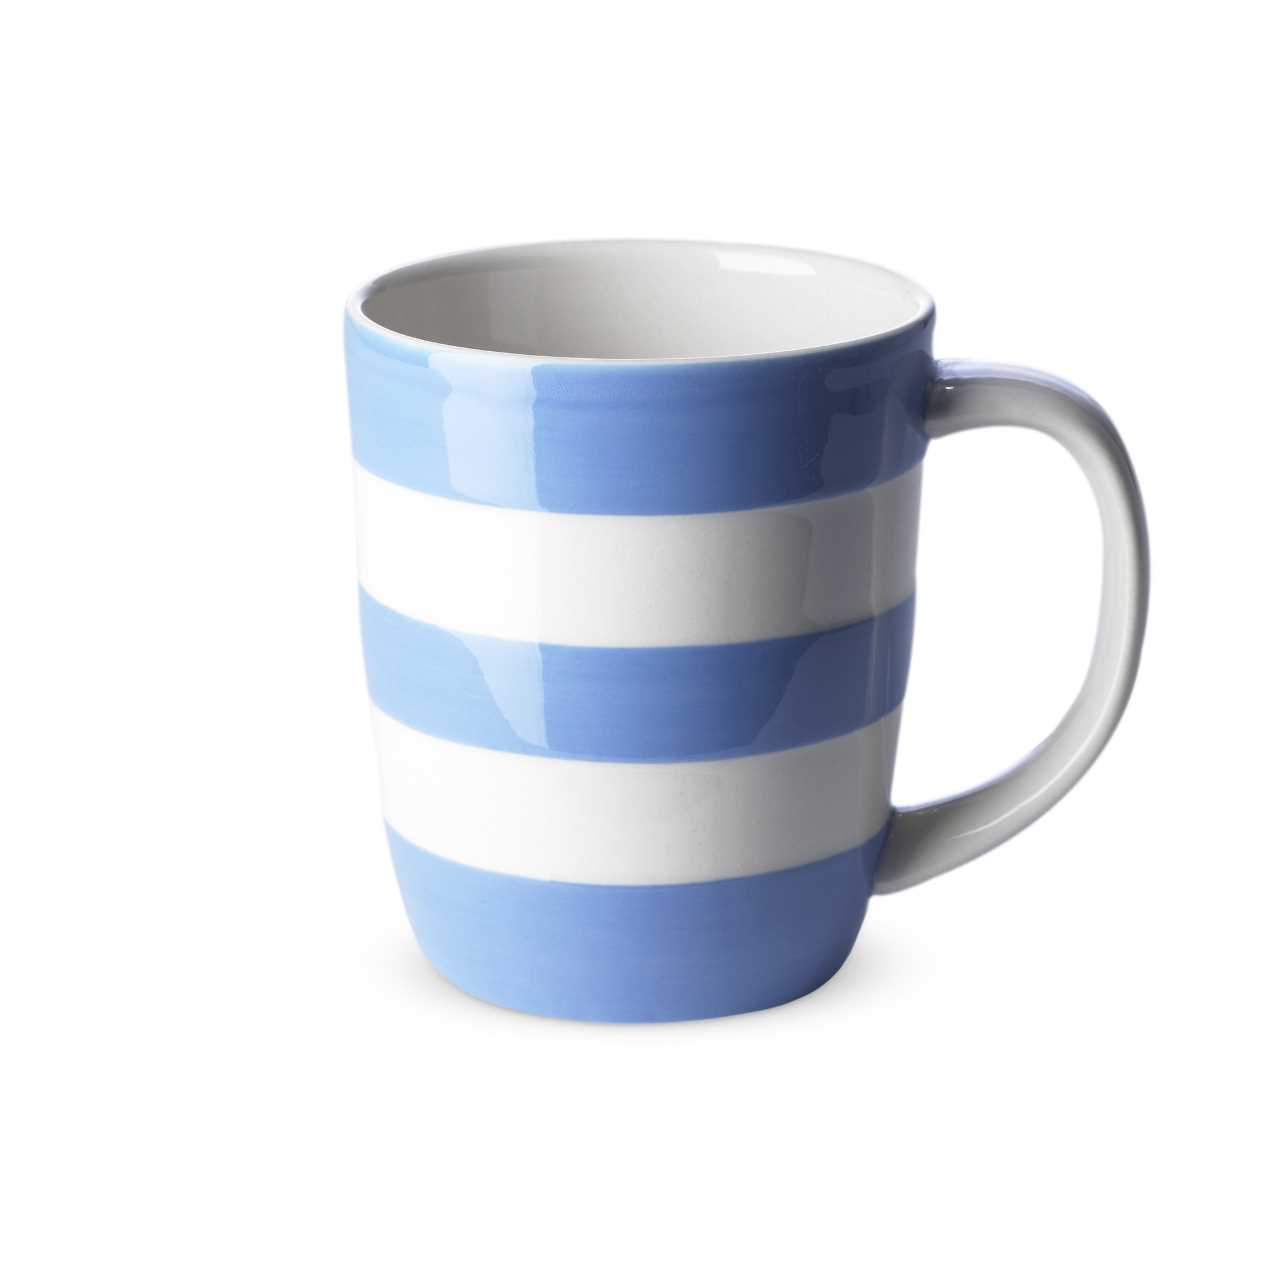 Cornishware Pottery Mug in blue stripes